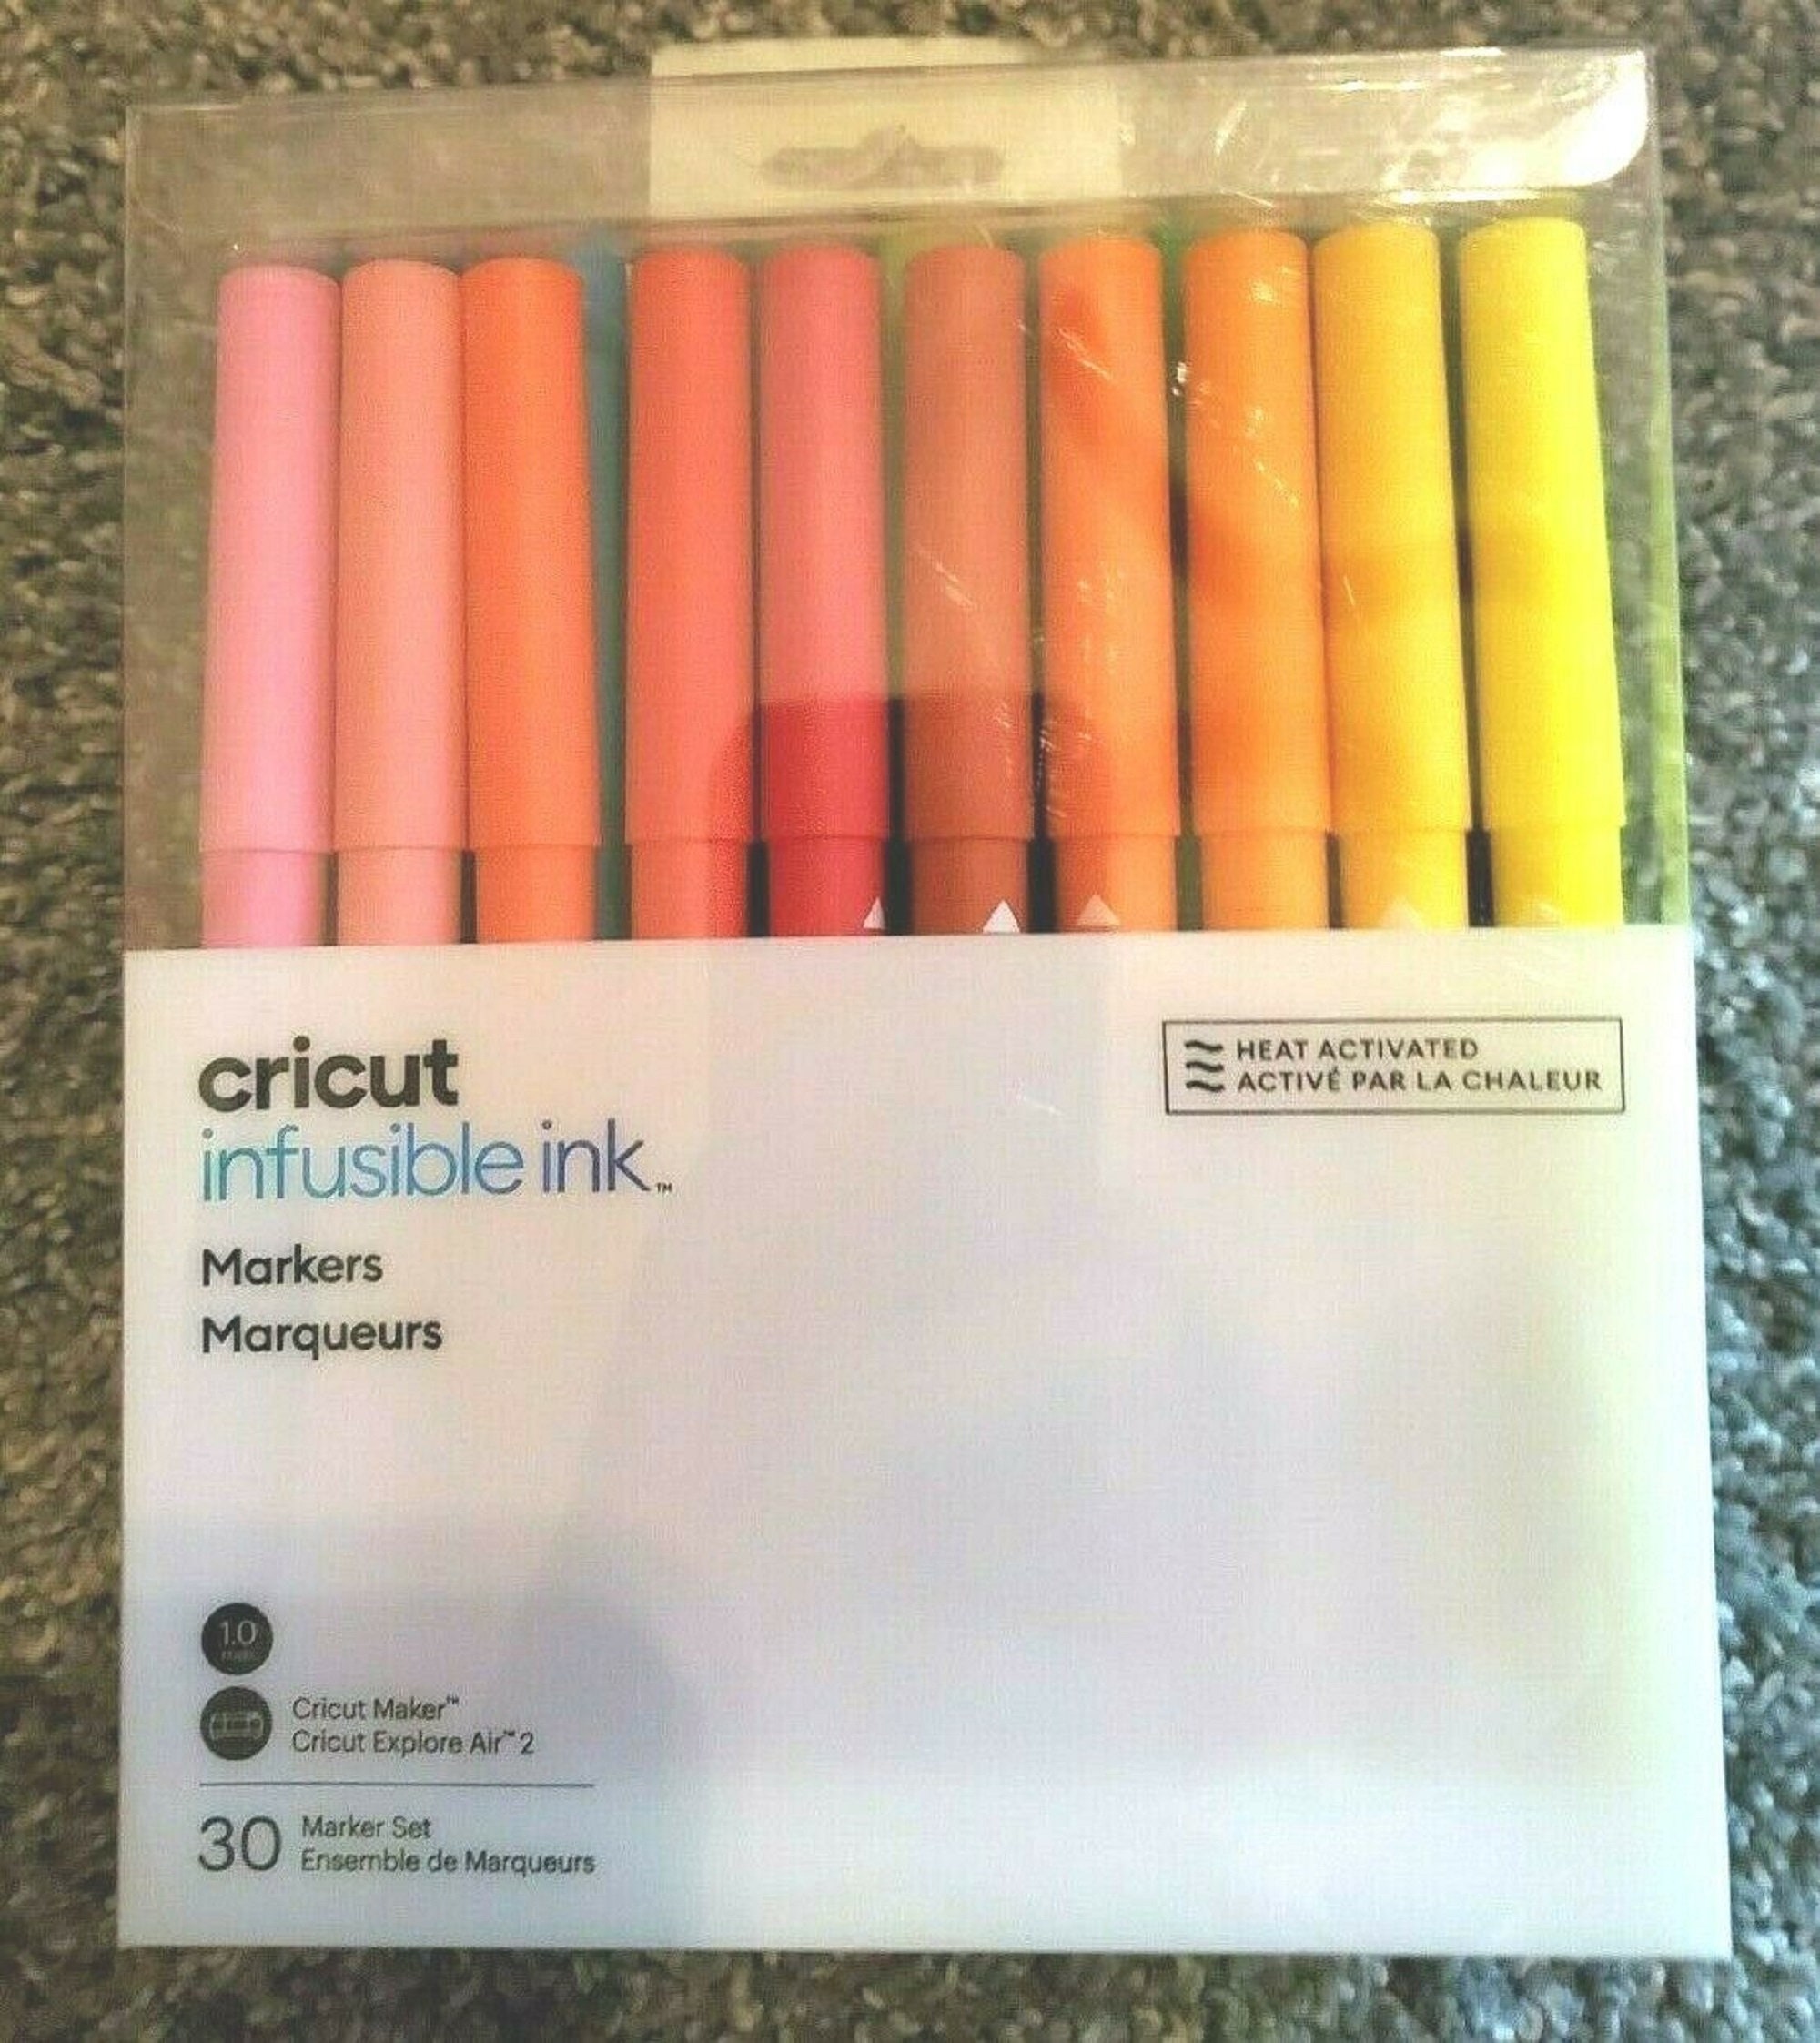 Cricut Infusible Ink Marker Set 30 Pack Explore Air 2 Maker